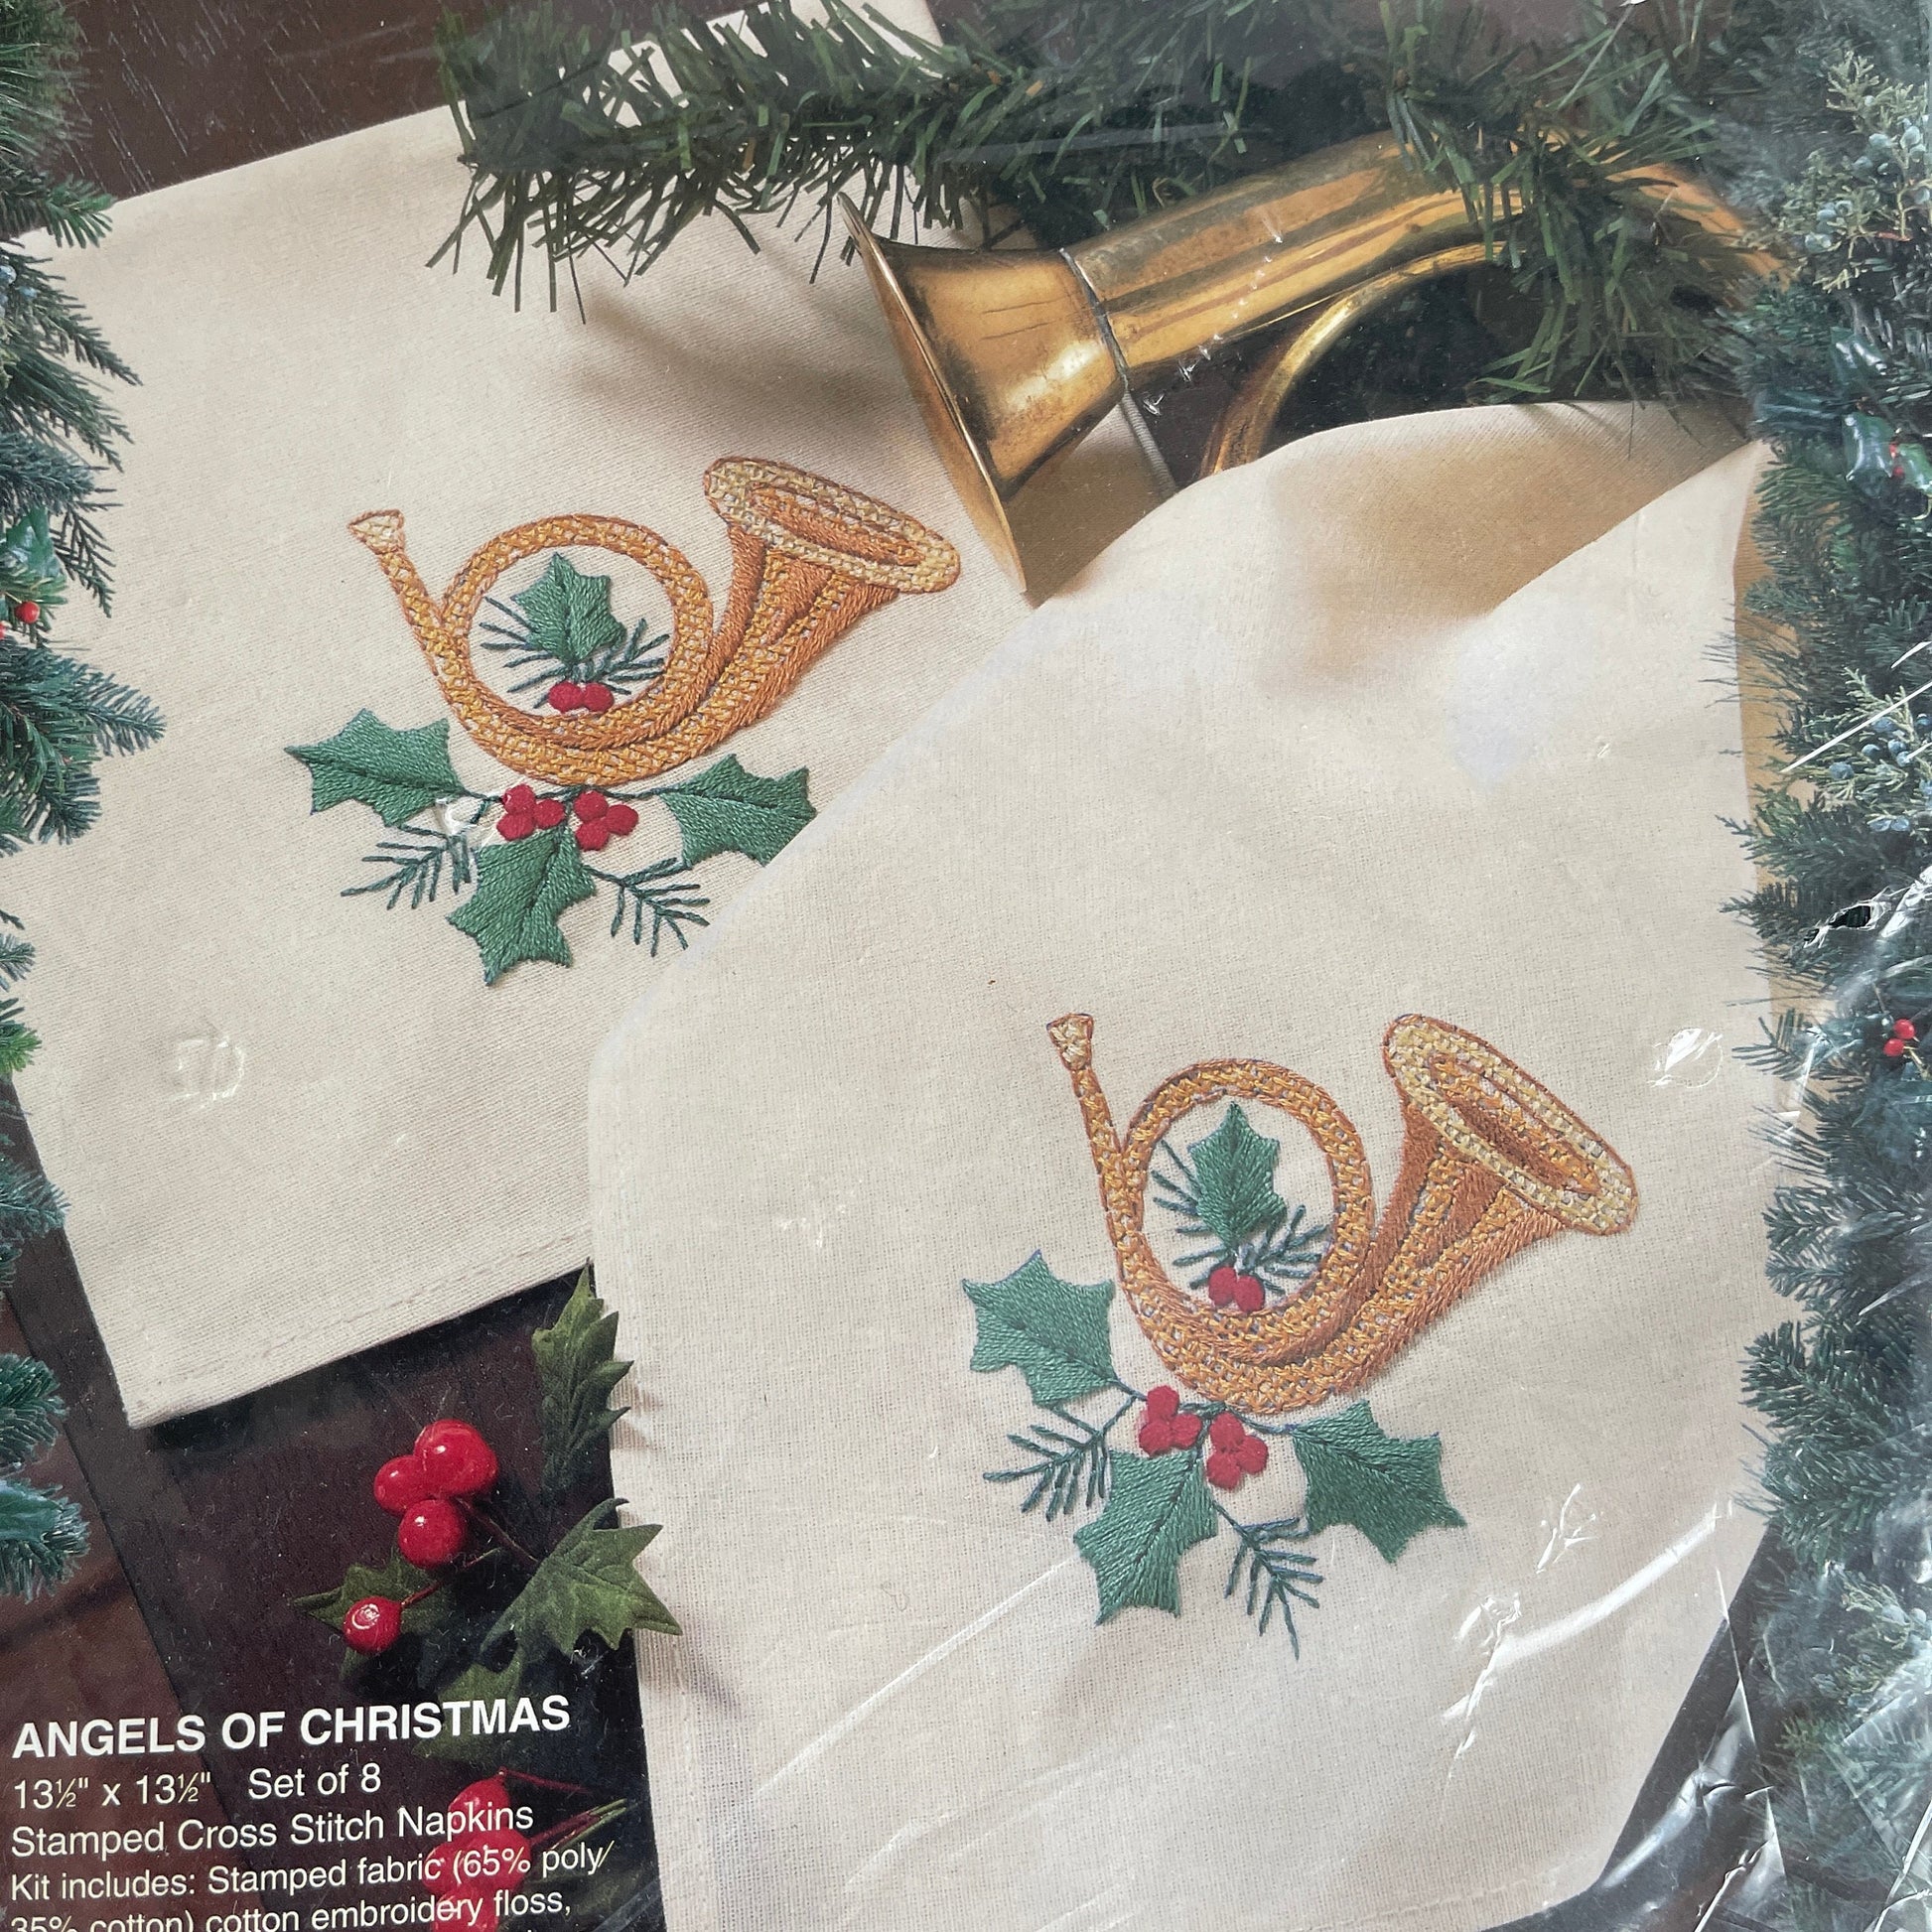 Bucilla Angels Of Christmas Vintage 1995 Set of 8 Stamped Cross Stitch Napkins Kit